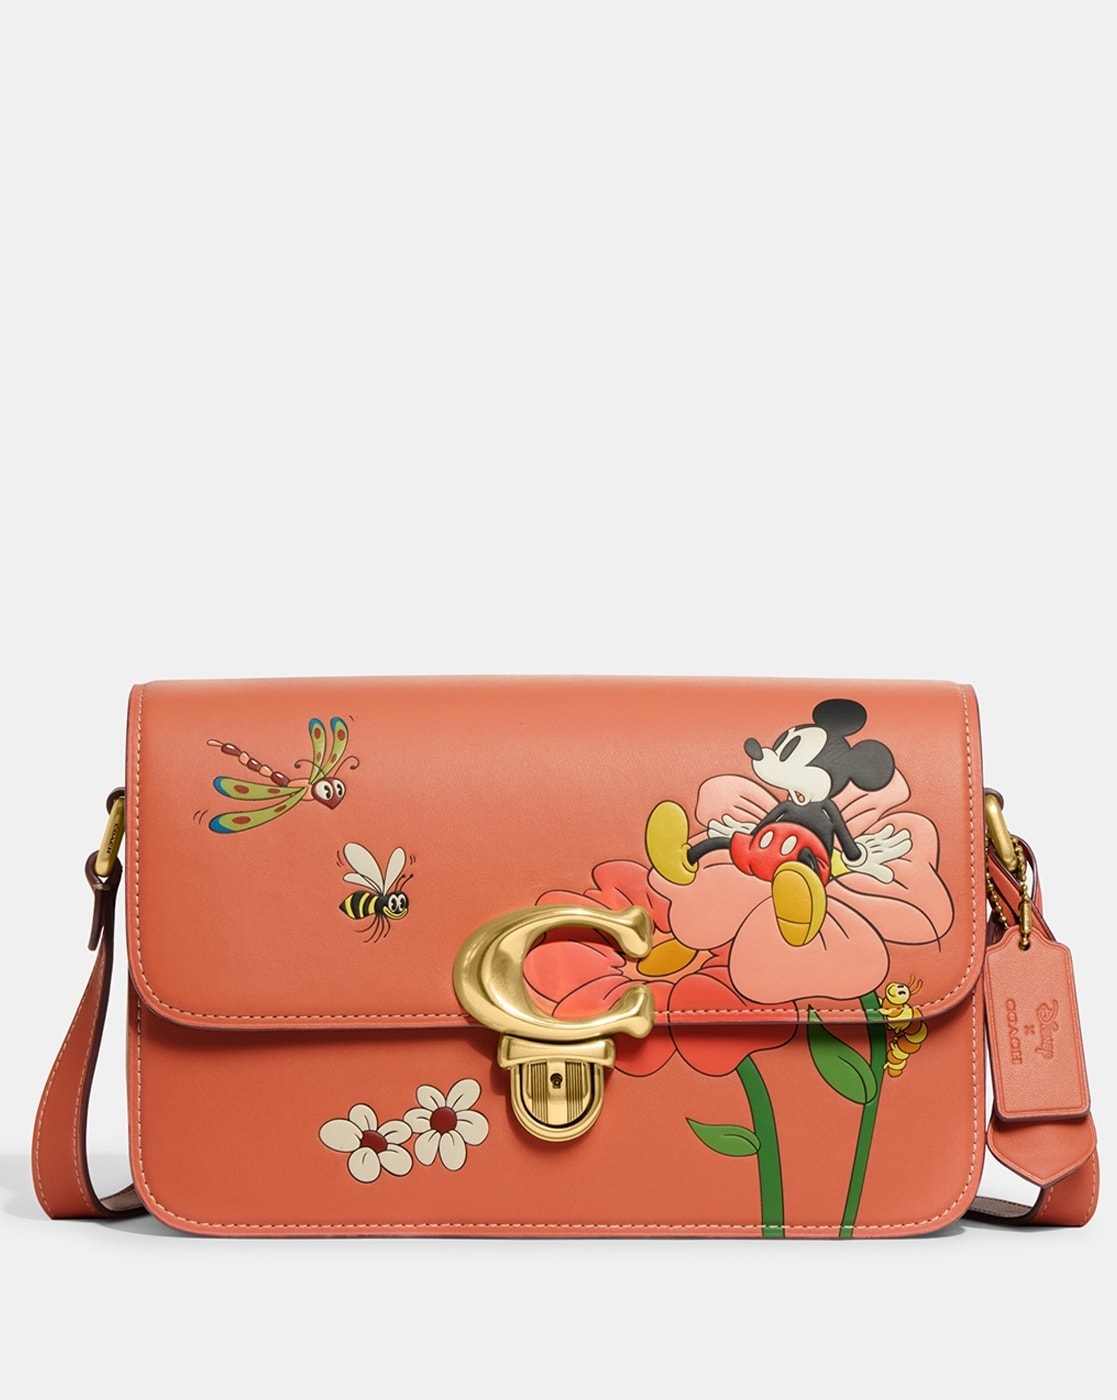 NEW Disney Coach Purses, Bags and Wallets! - Disney Fashion Blog